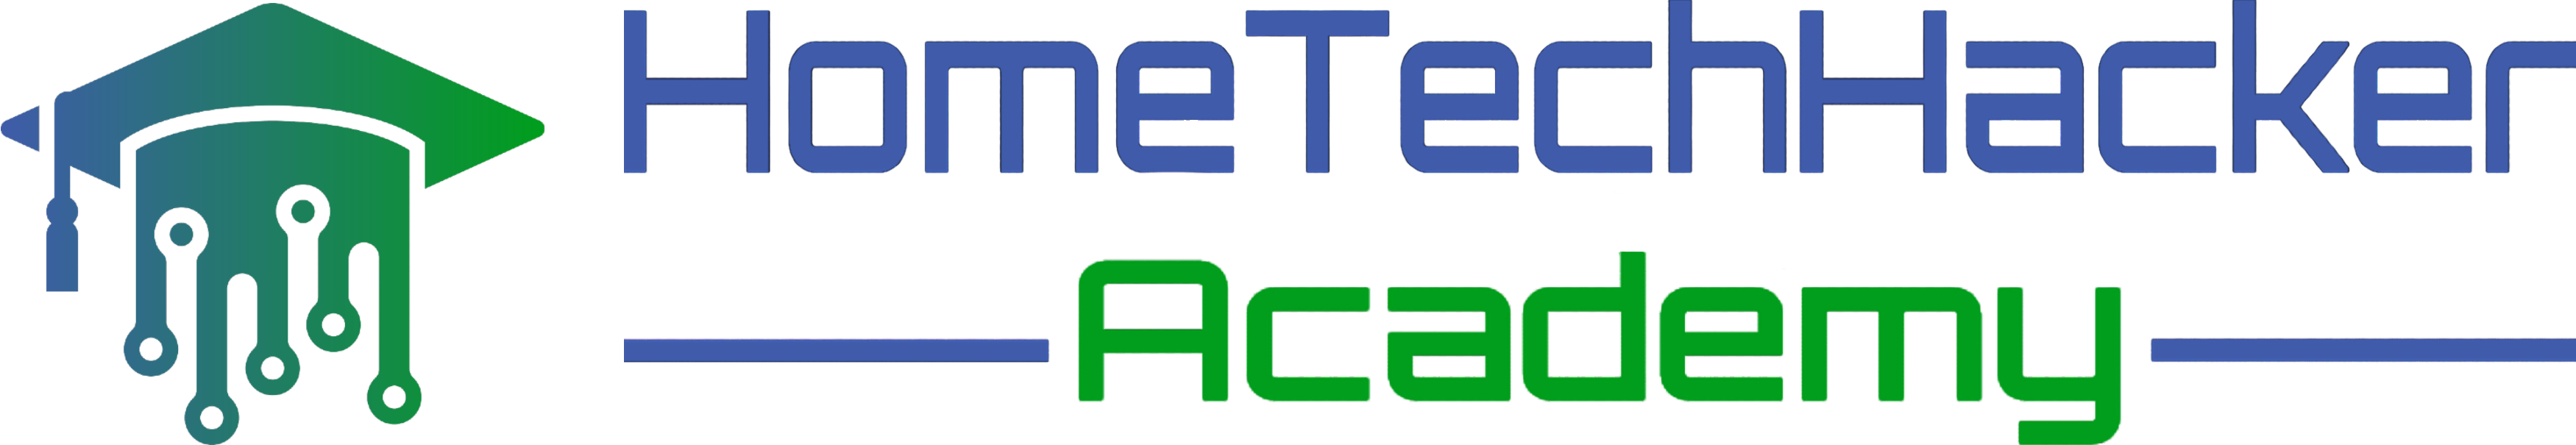 HomeTechHacker Academy Logo